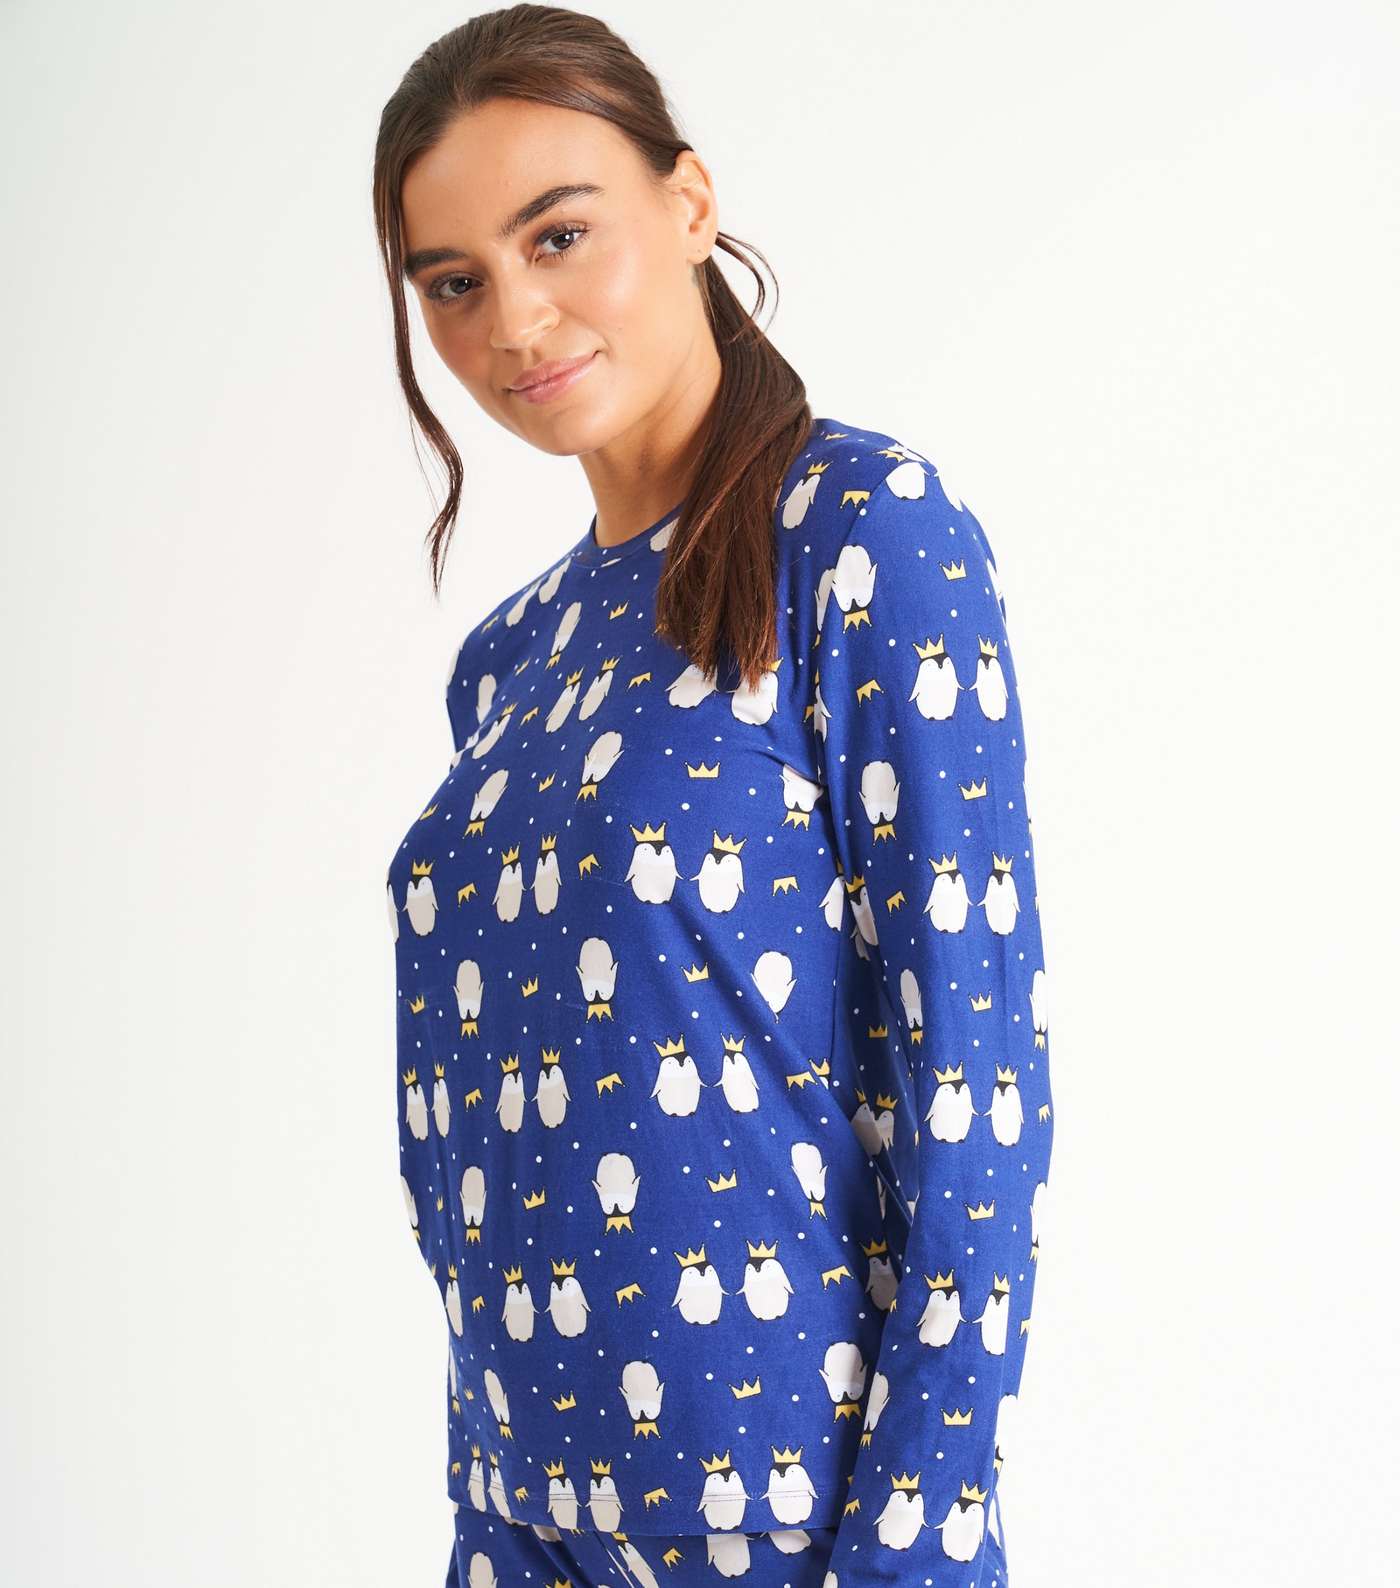 Loungeable Blue Legging Pyjama Set with Penguin Print Image 2